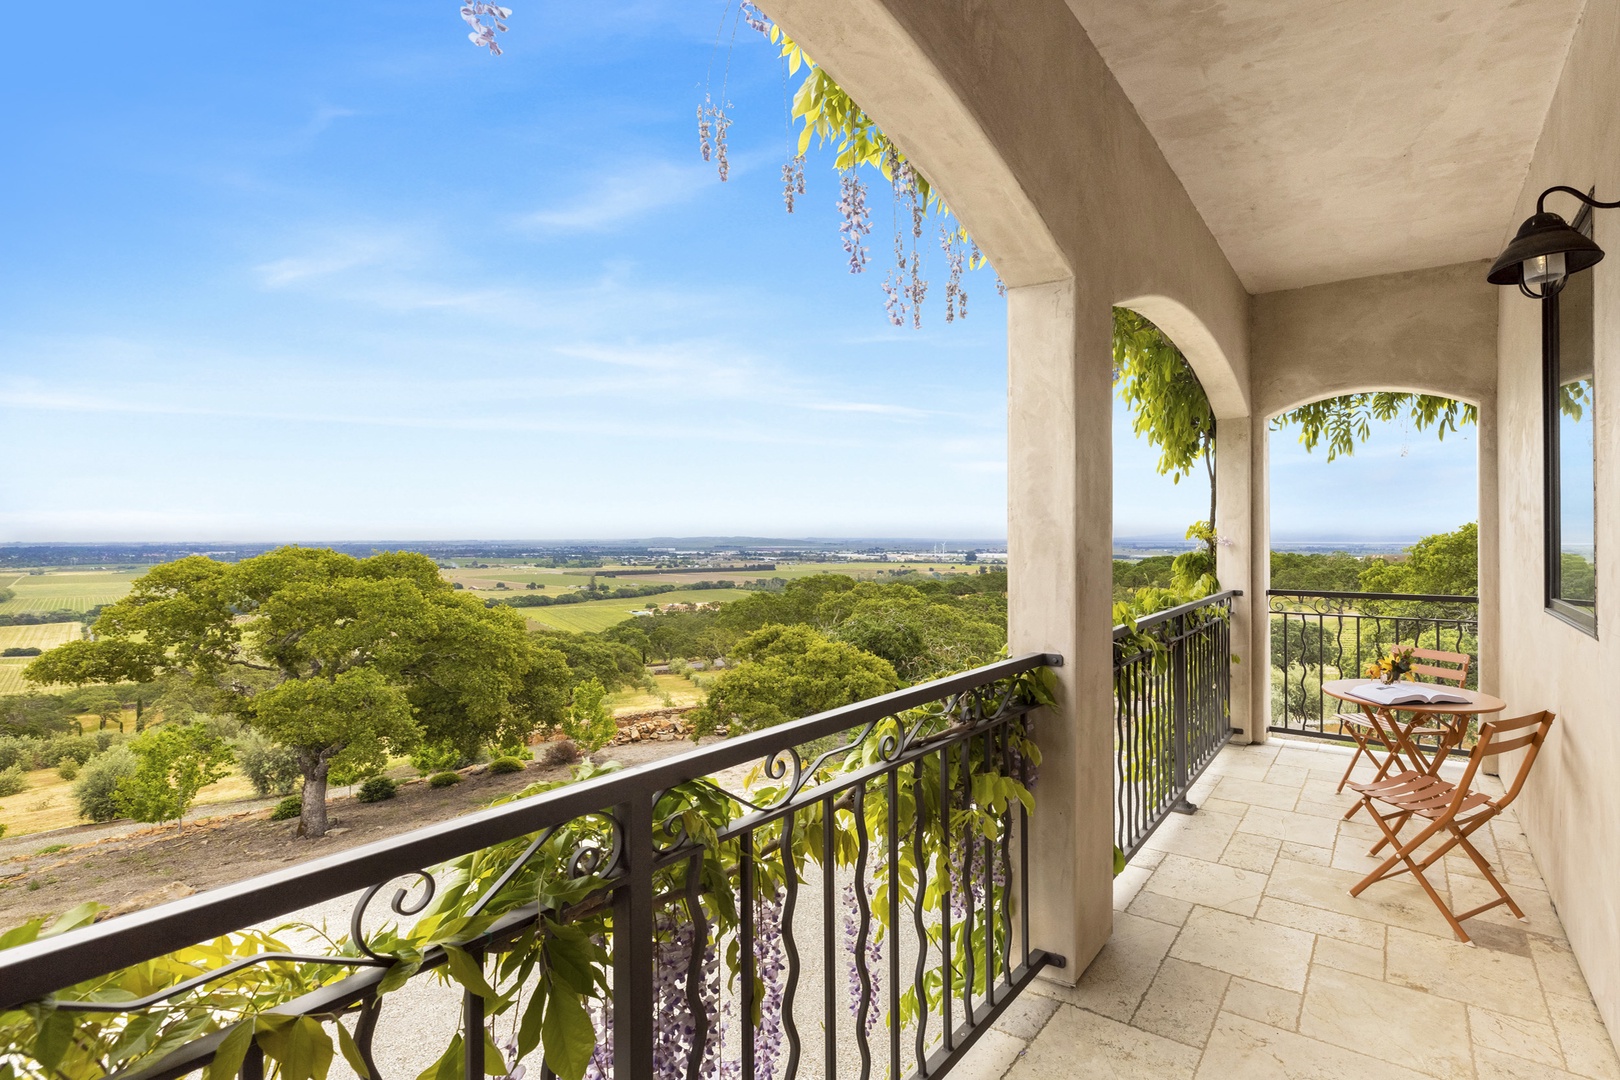 Fairfield Vacation Rentals, Villa Capricho - Views off the Guest House patio